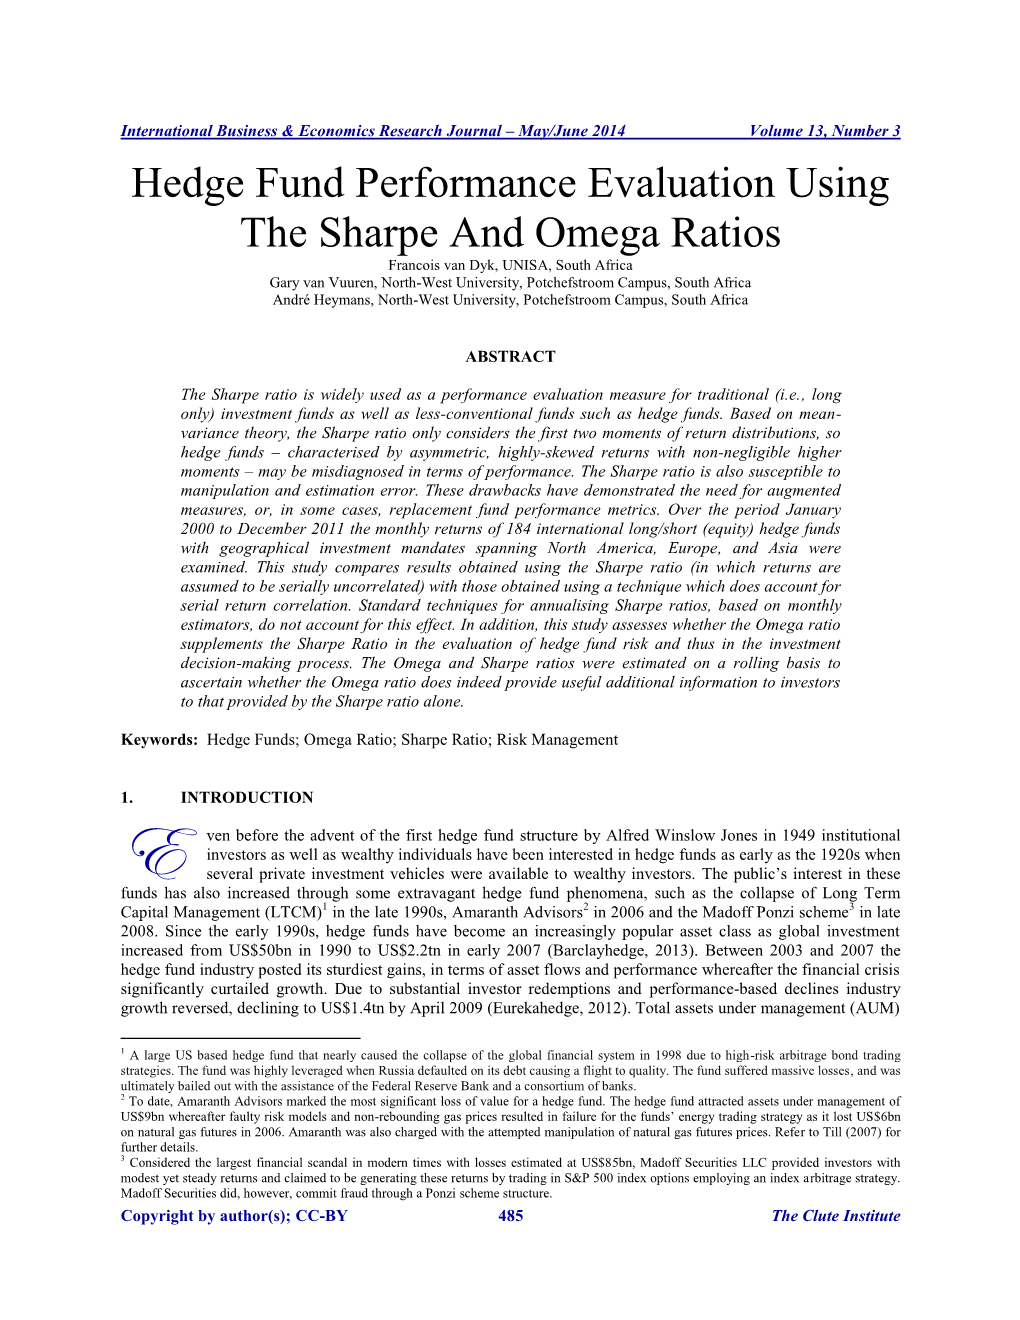 Hedge Fund Performance Evaluation